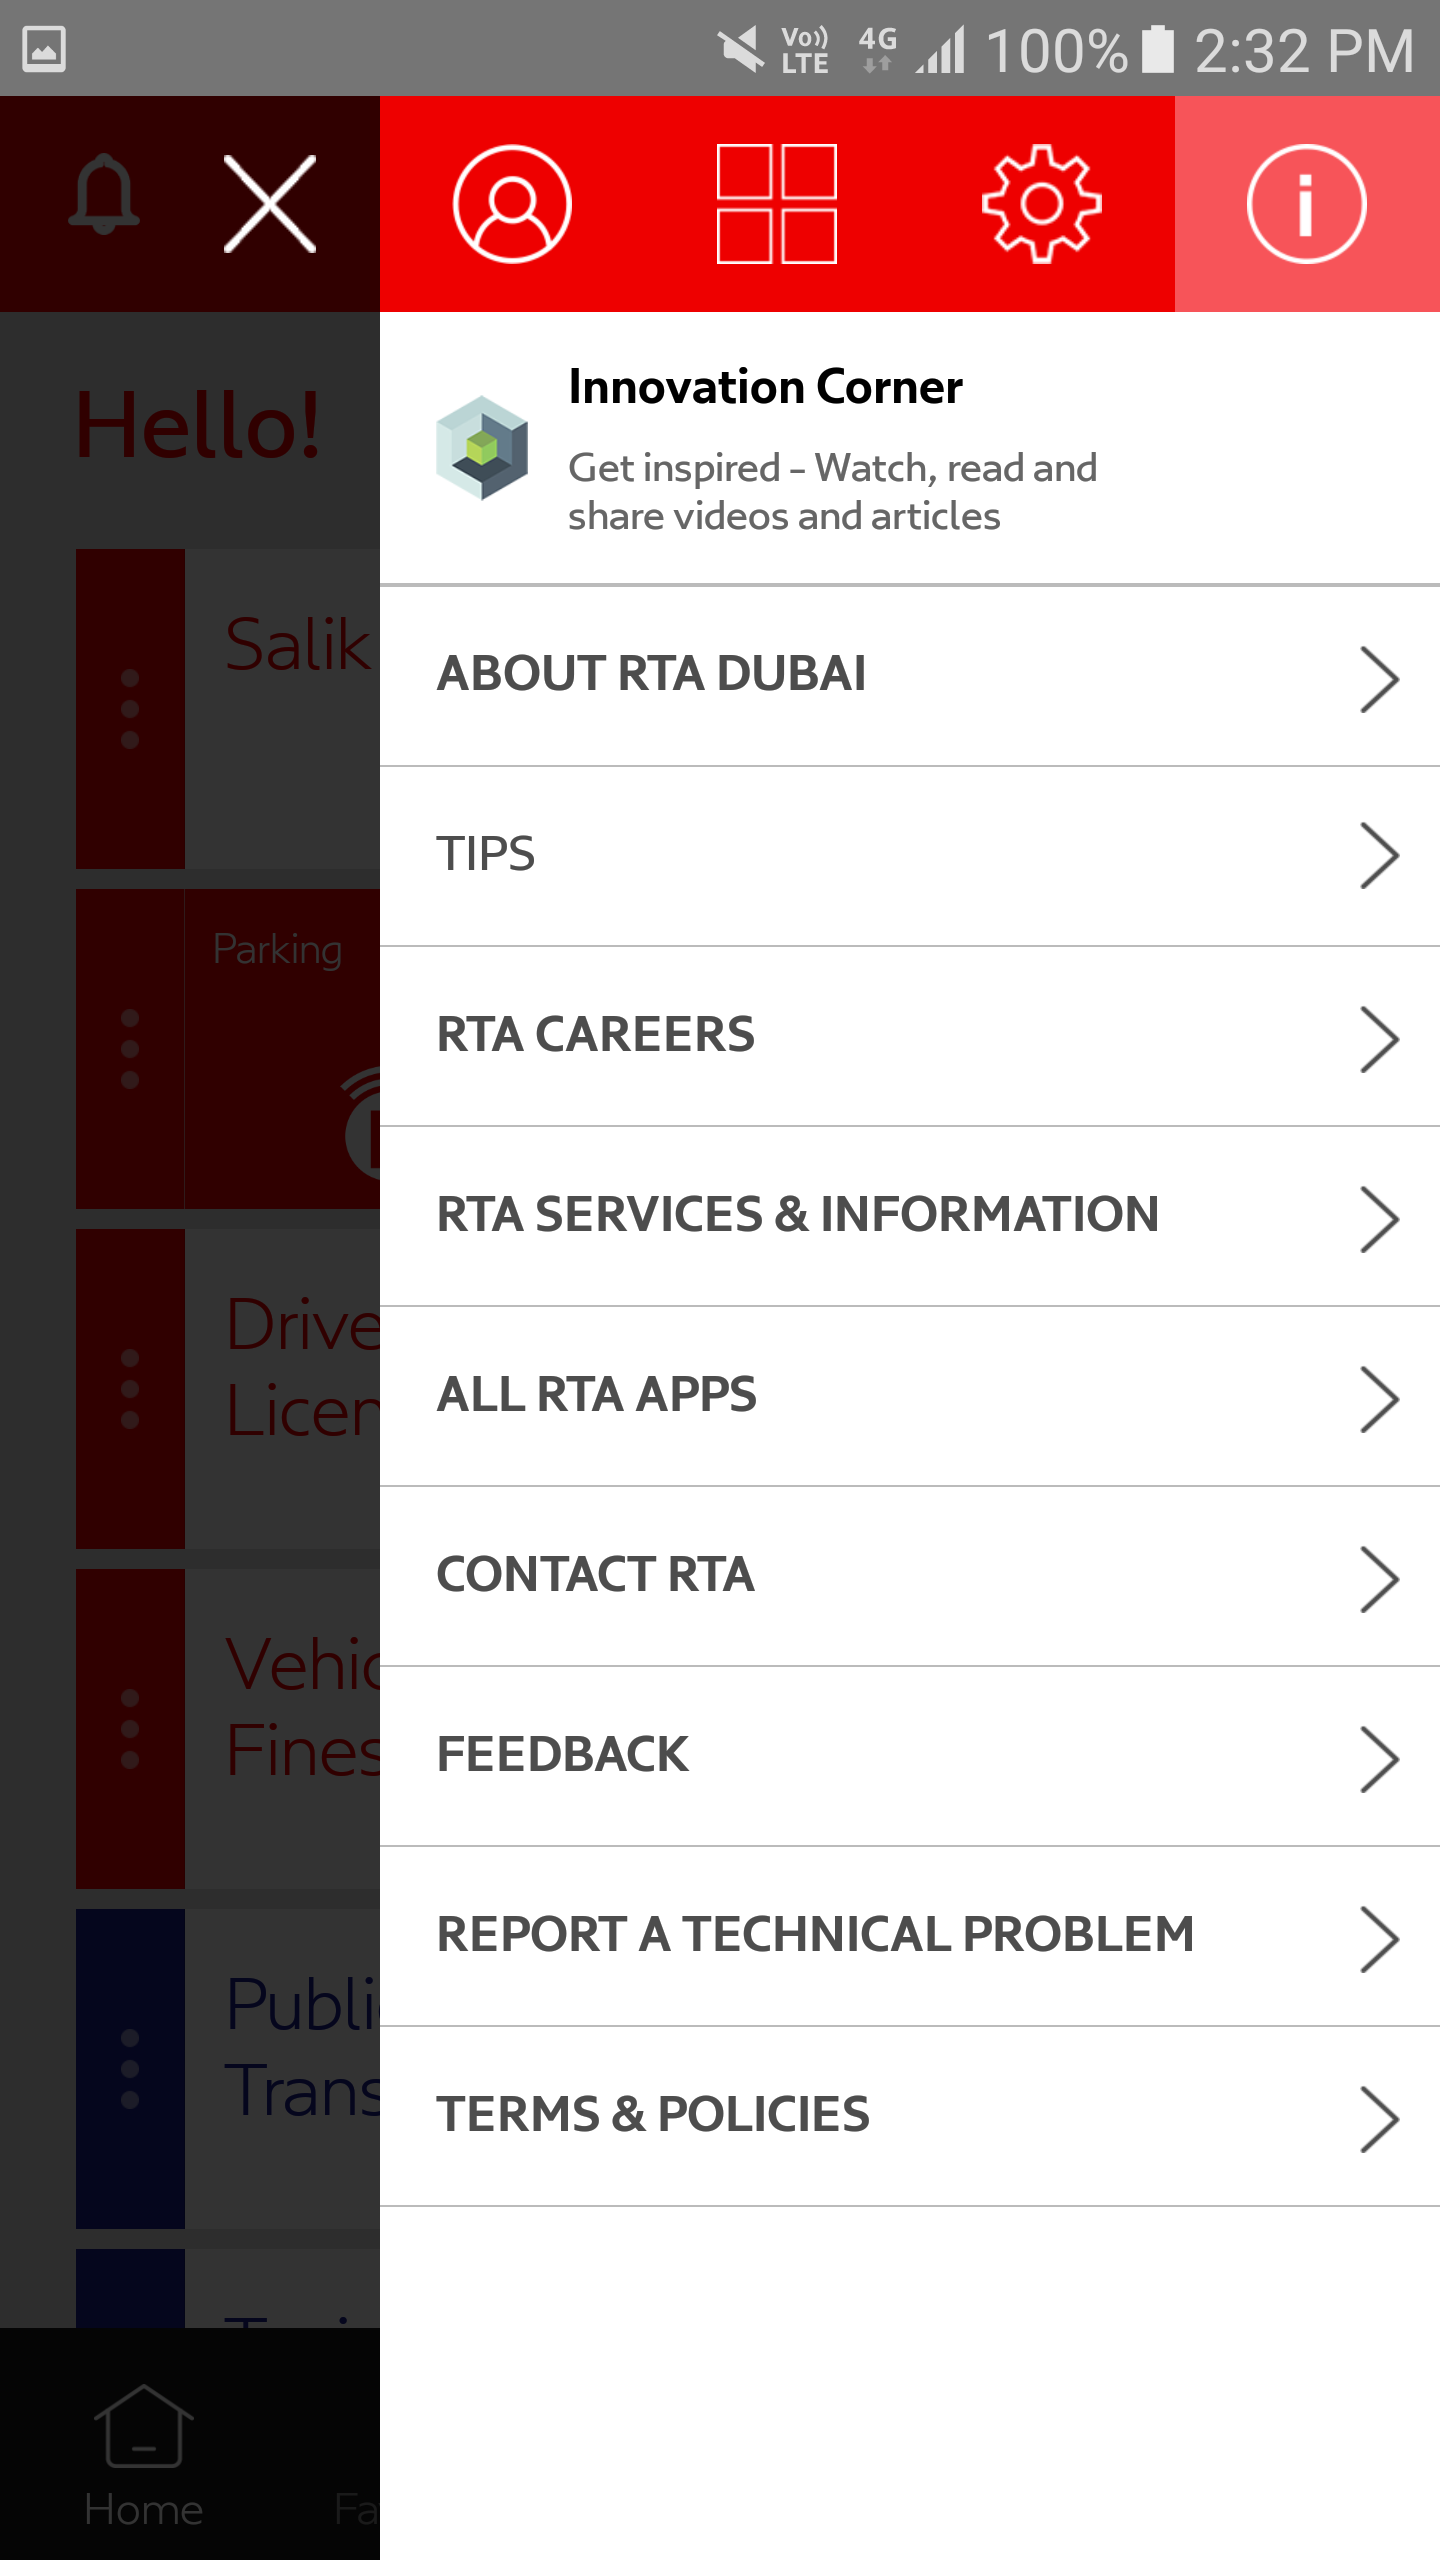 RTA Dubai App innovation corner screen